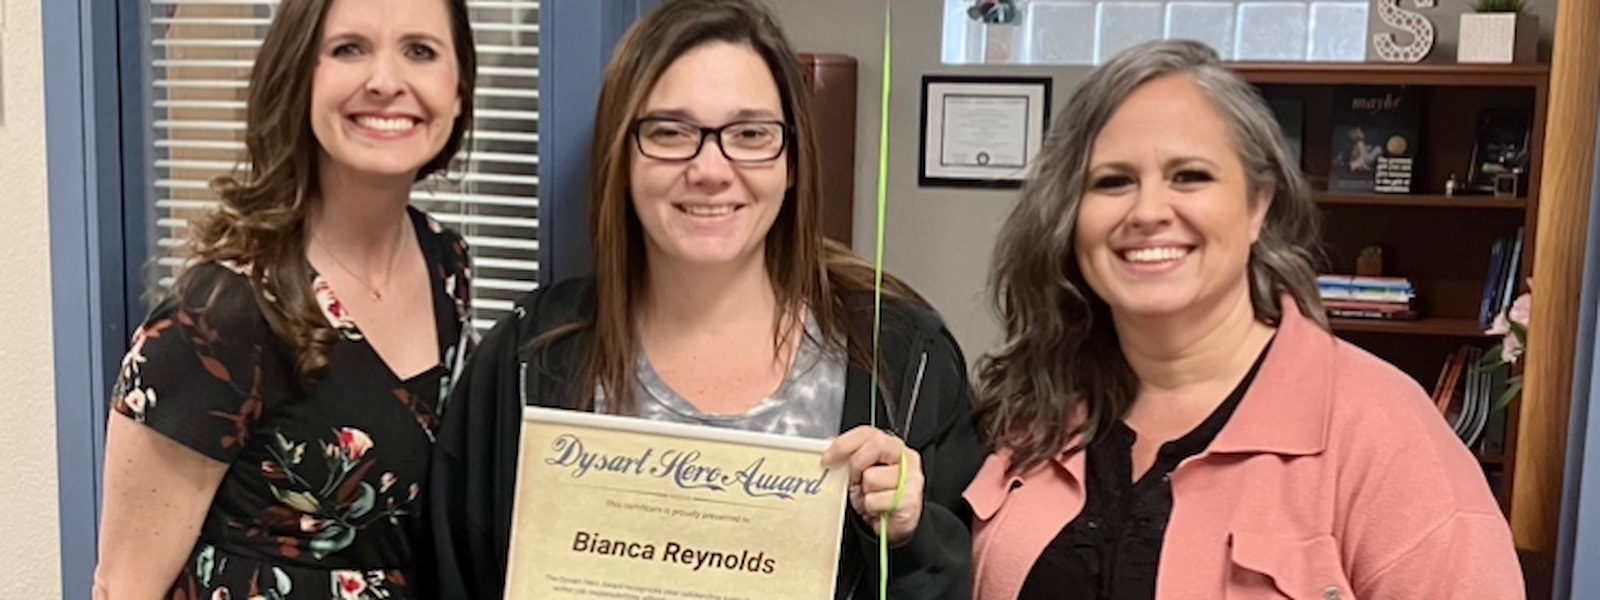 Bianca Reynolds with Dysart Hero Award